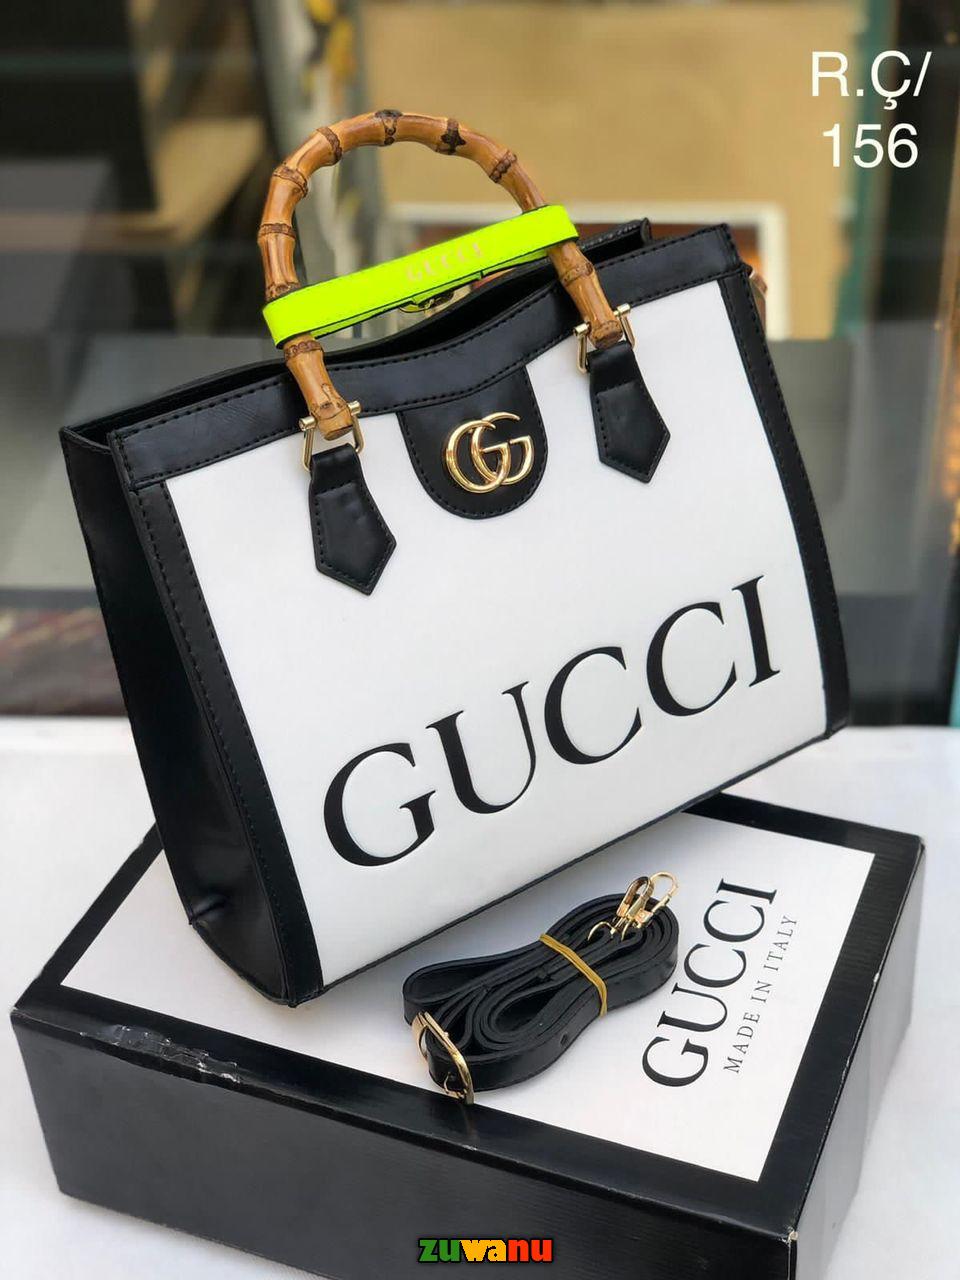 Gucci Luxury handbag.